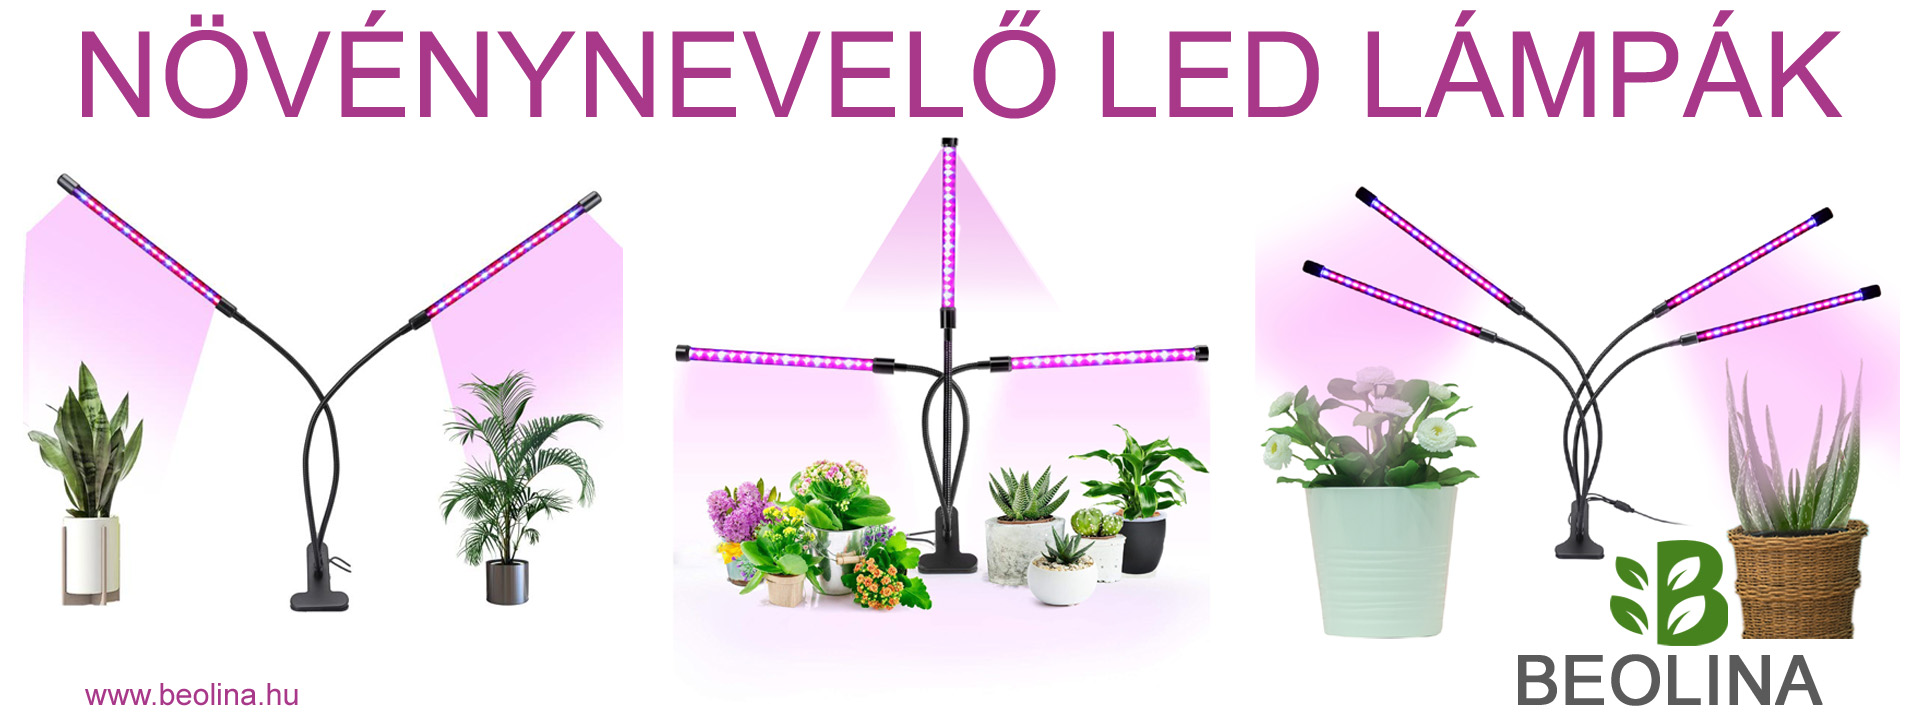 Beolina Növénynevelő LED lámpák